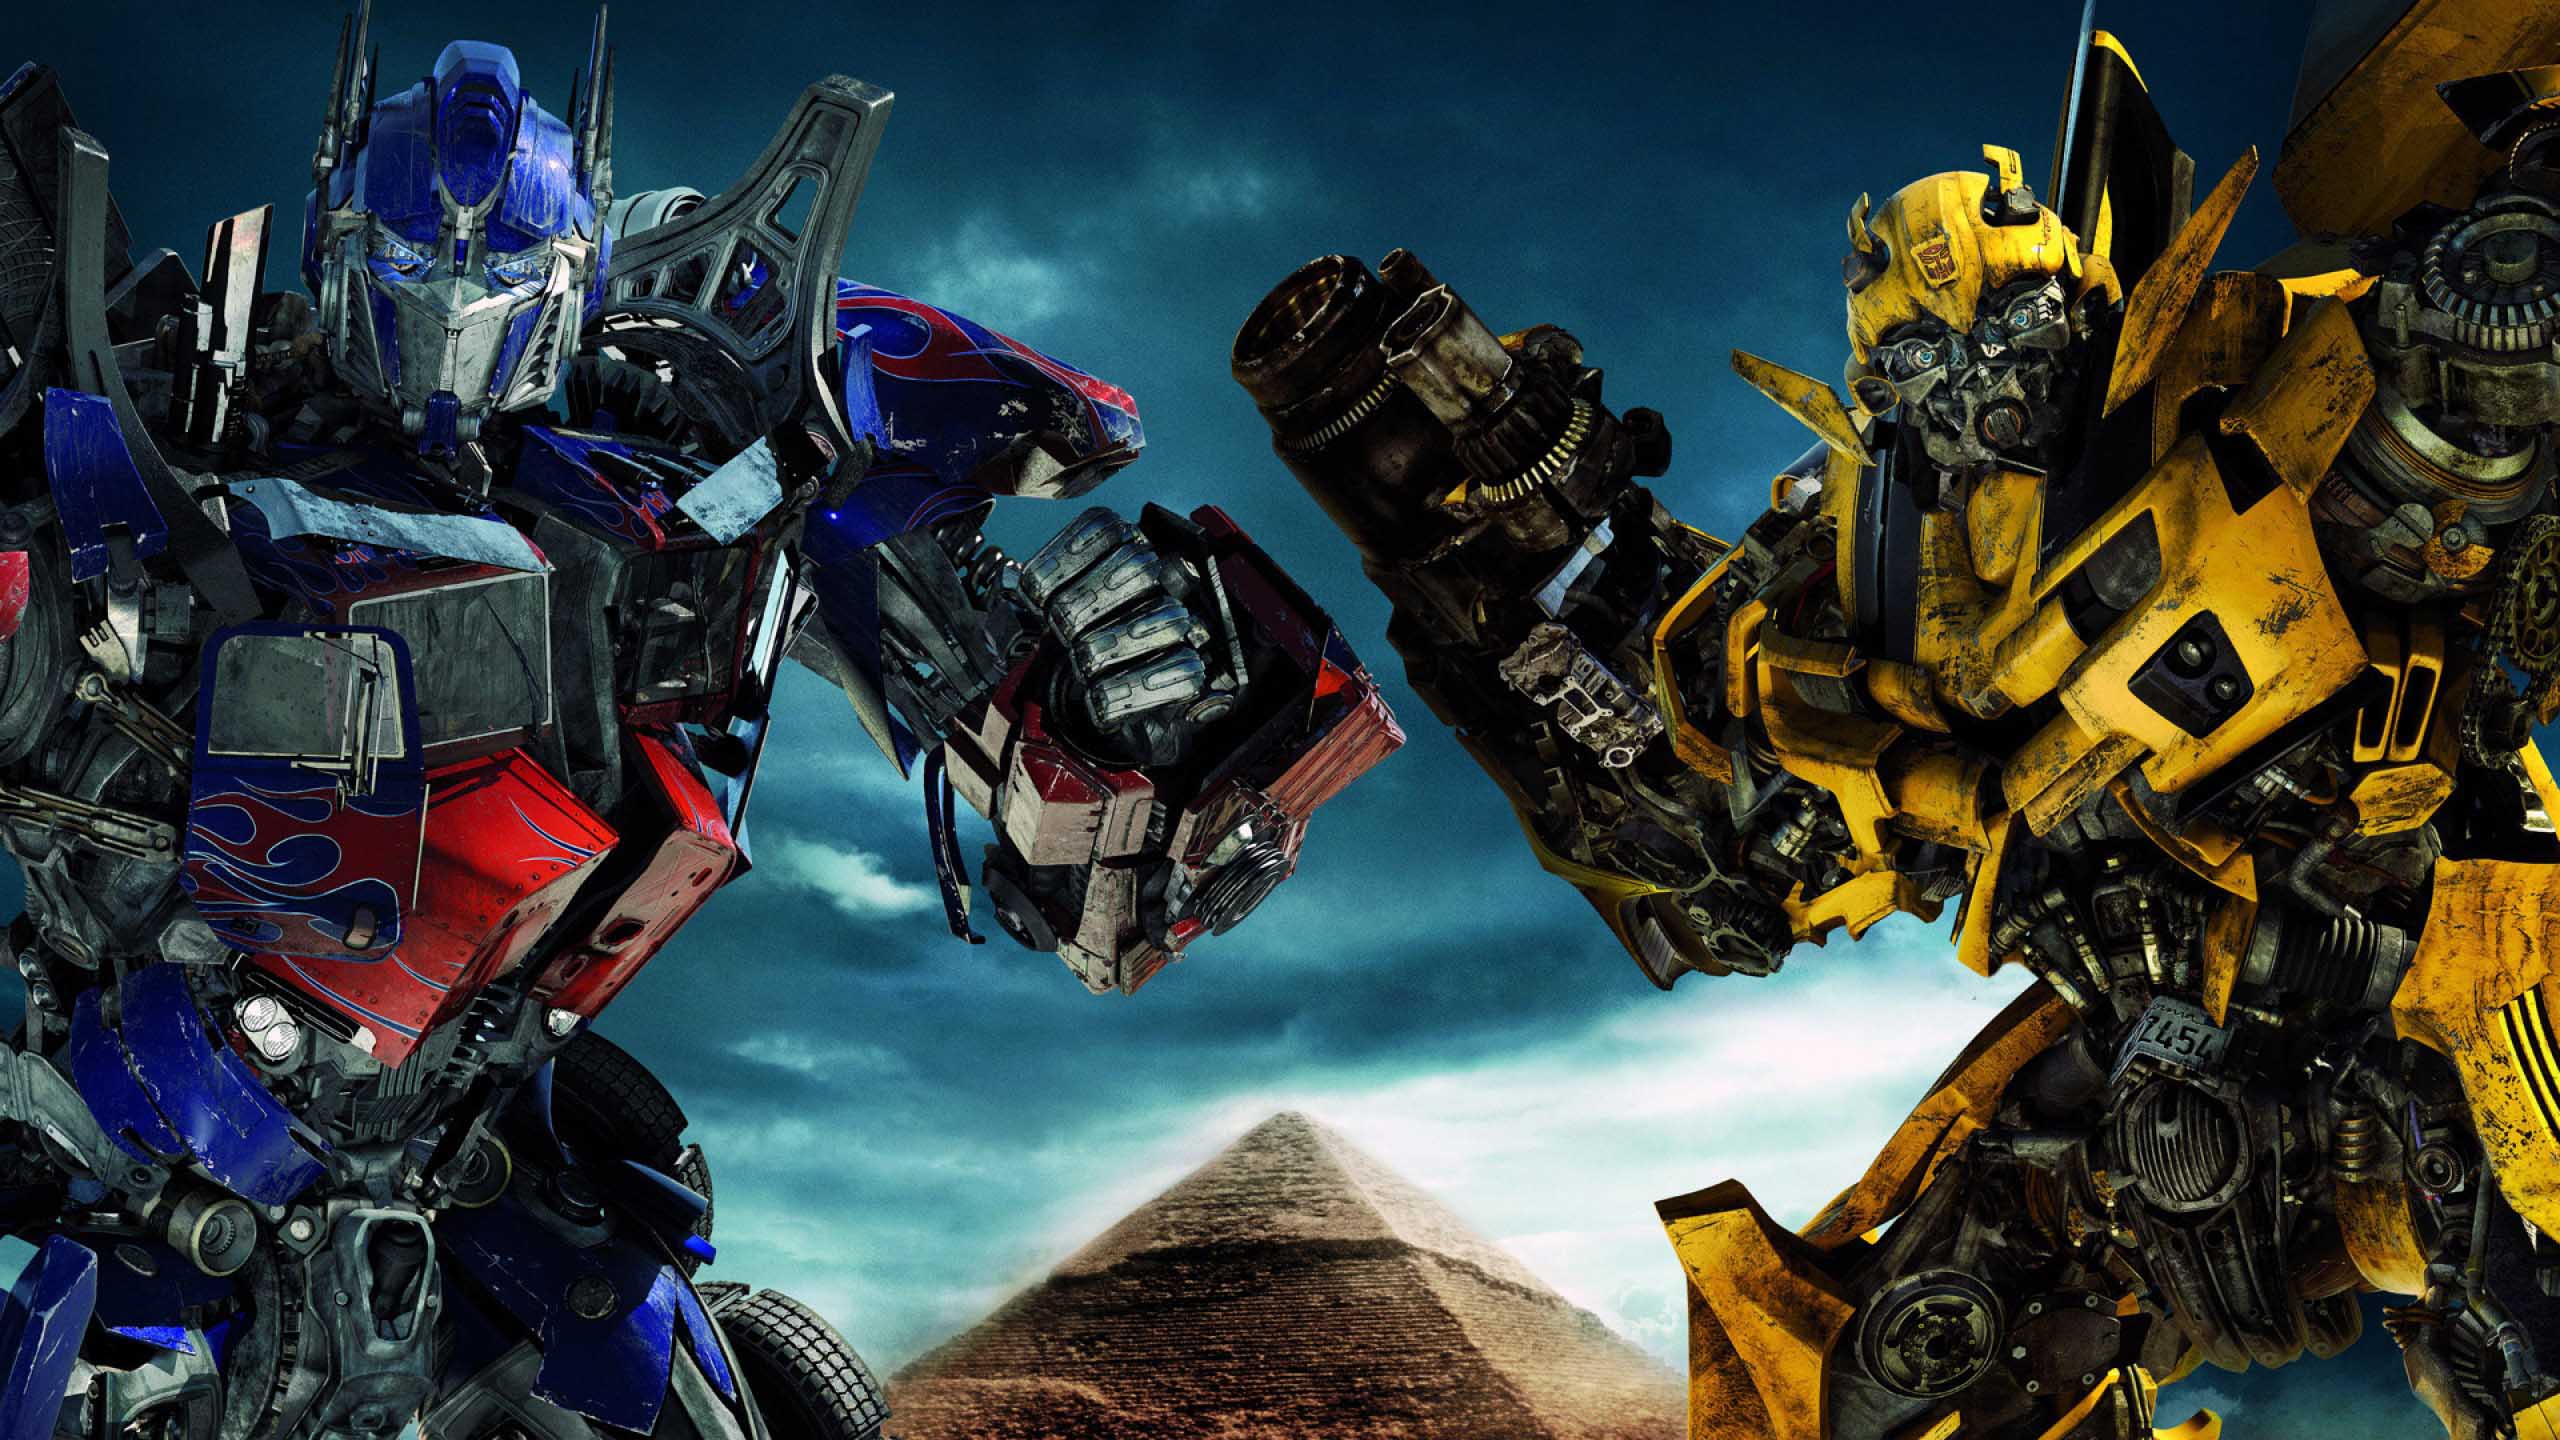 Transformers Wallpaper HD. Wallpaper, Background, Image, Art